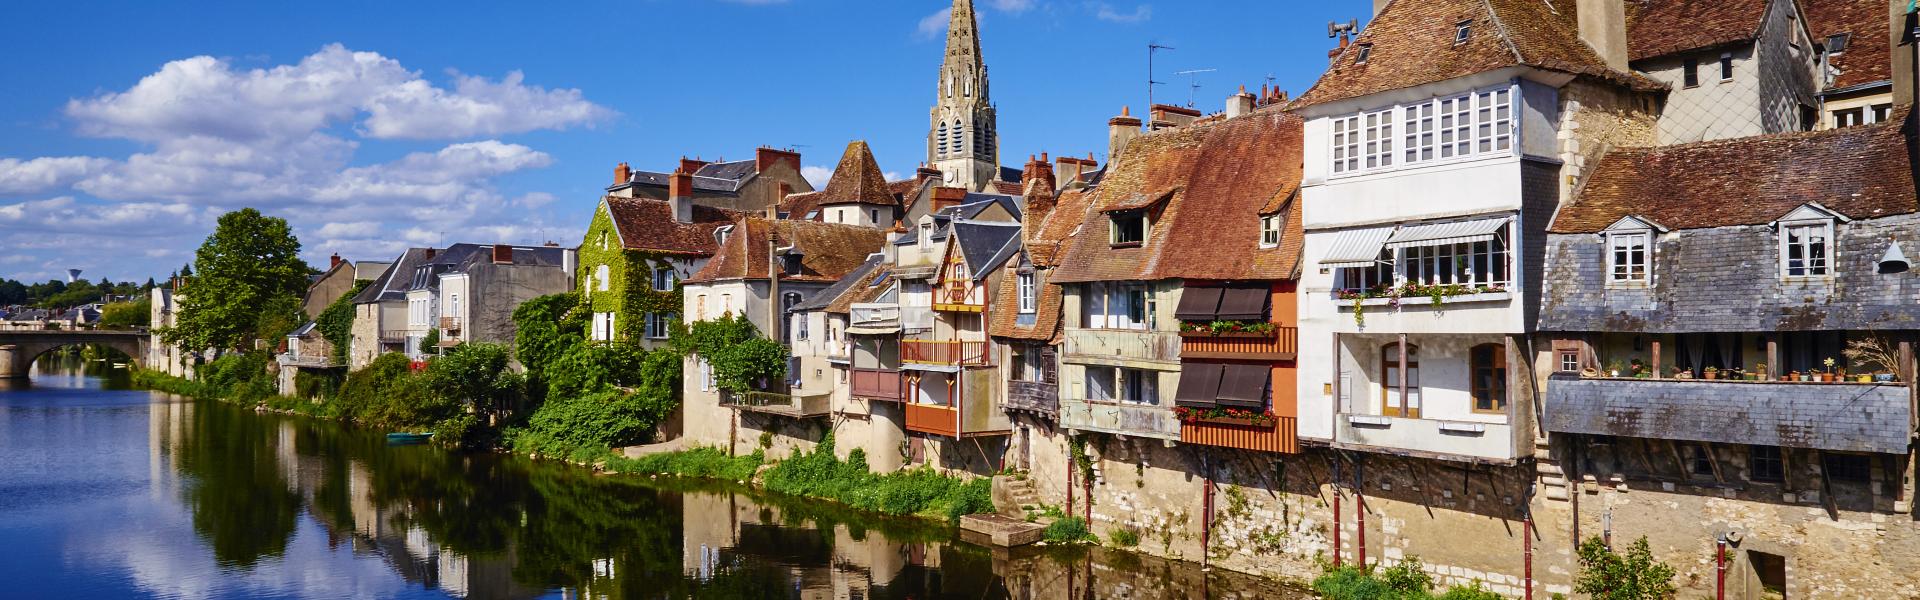 France, Indre (36), Argenton-sur-Creuse, old houses on the river bank Creuse